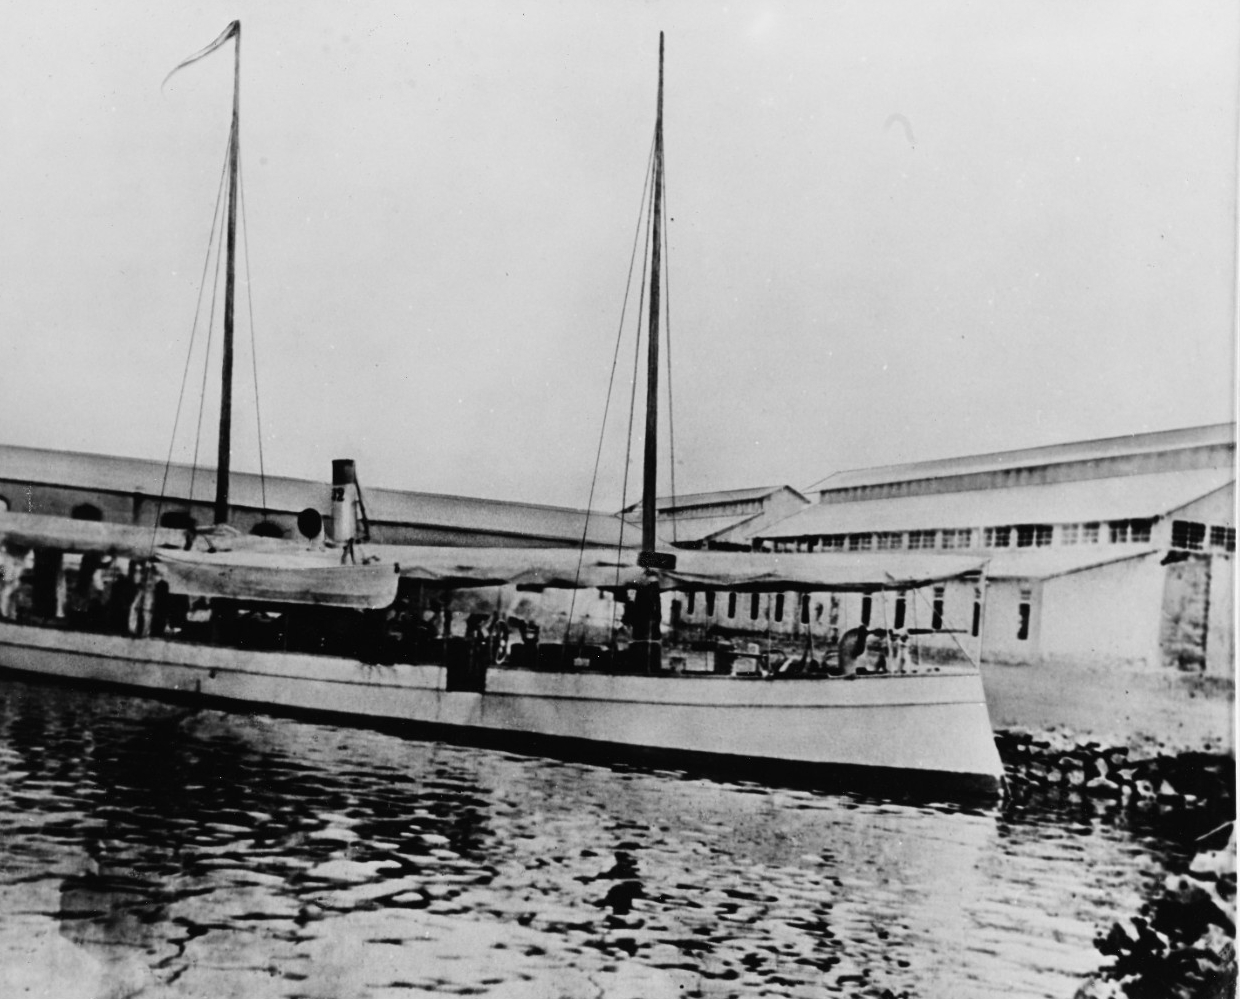 USS URDANETA, 1899-1913